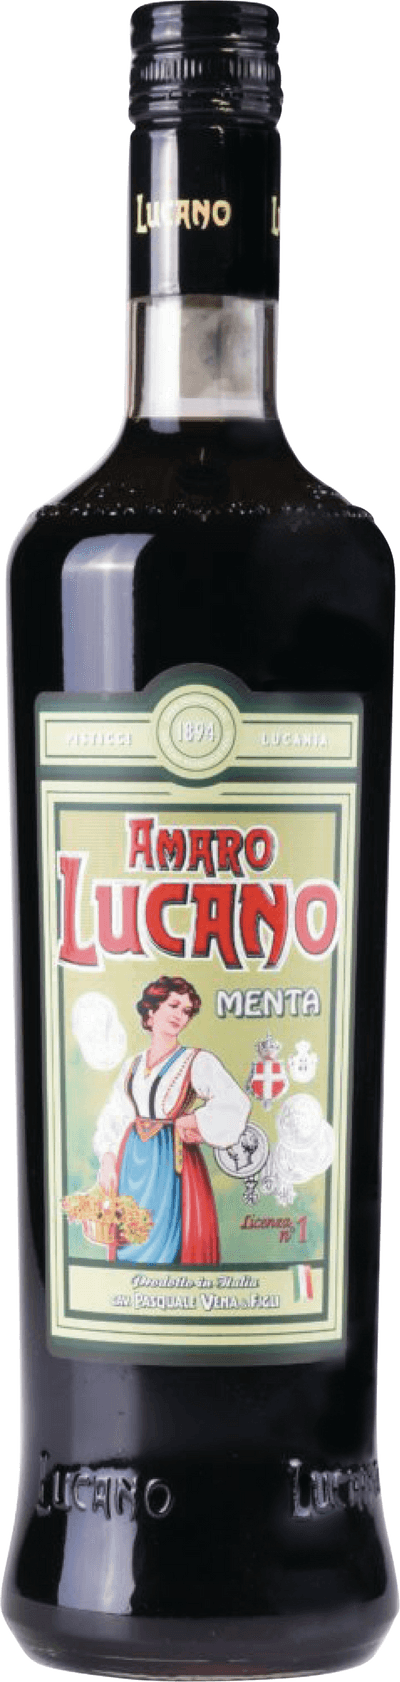 Amaro Lucano Menta